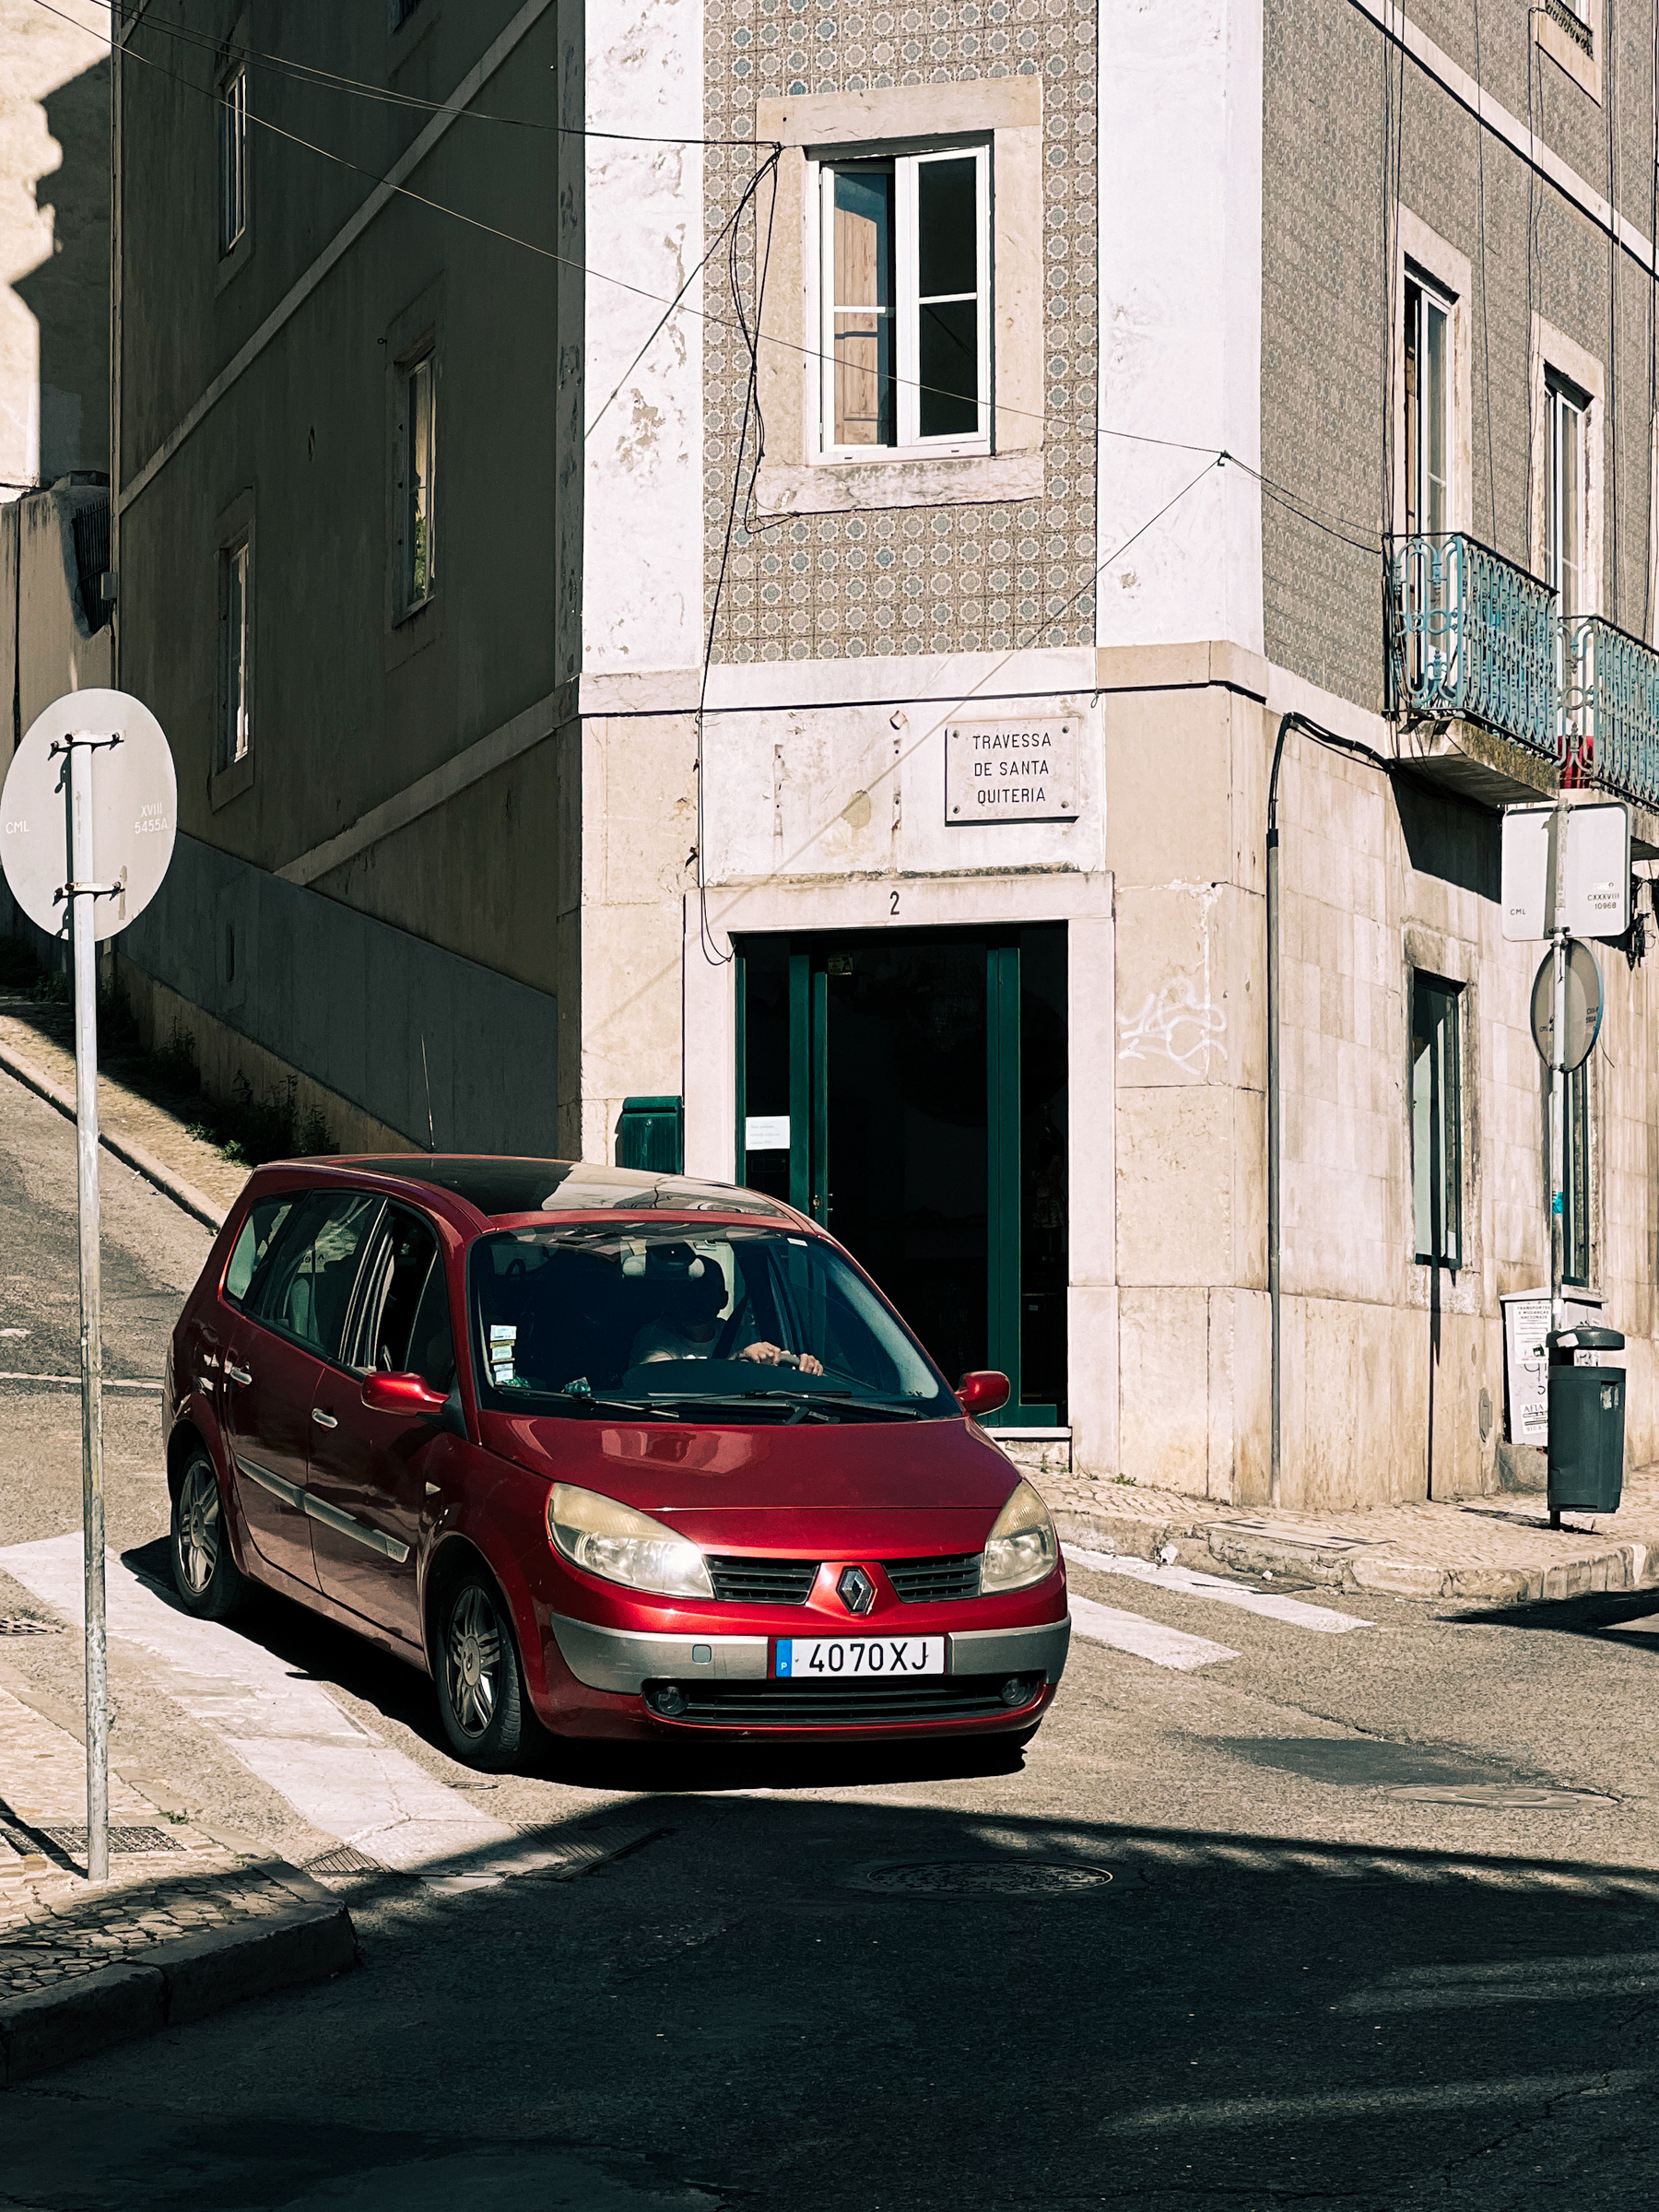 A red car on a street corner. 